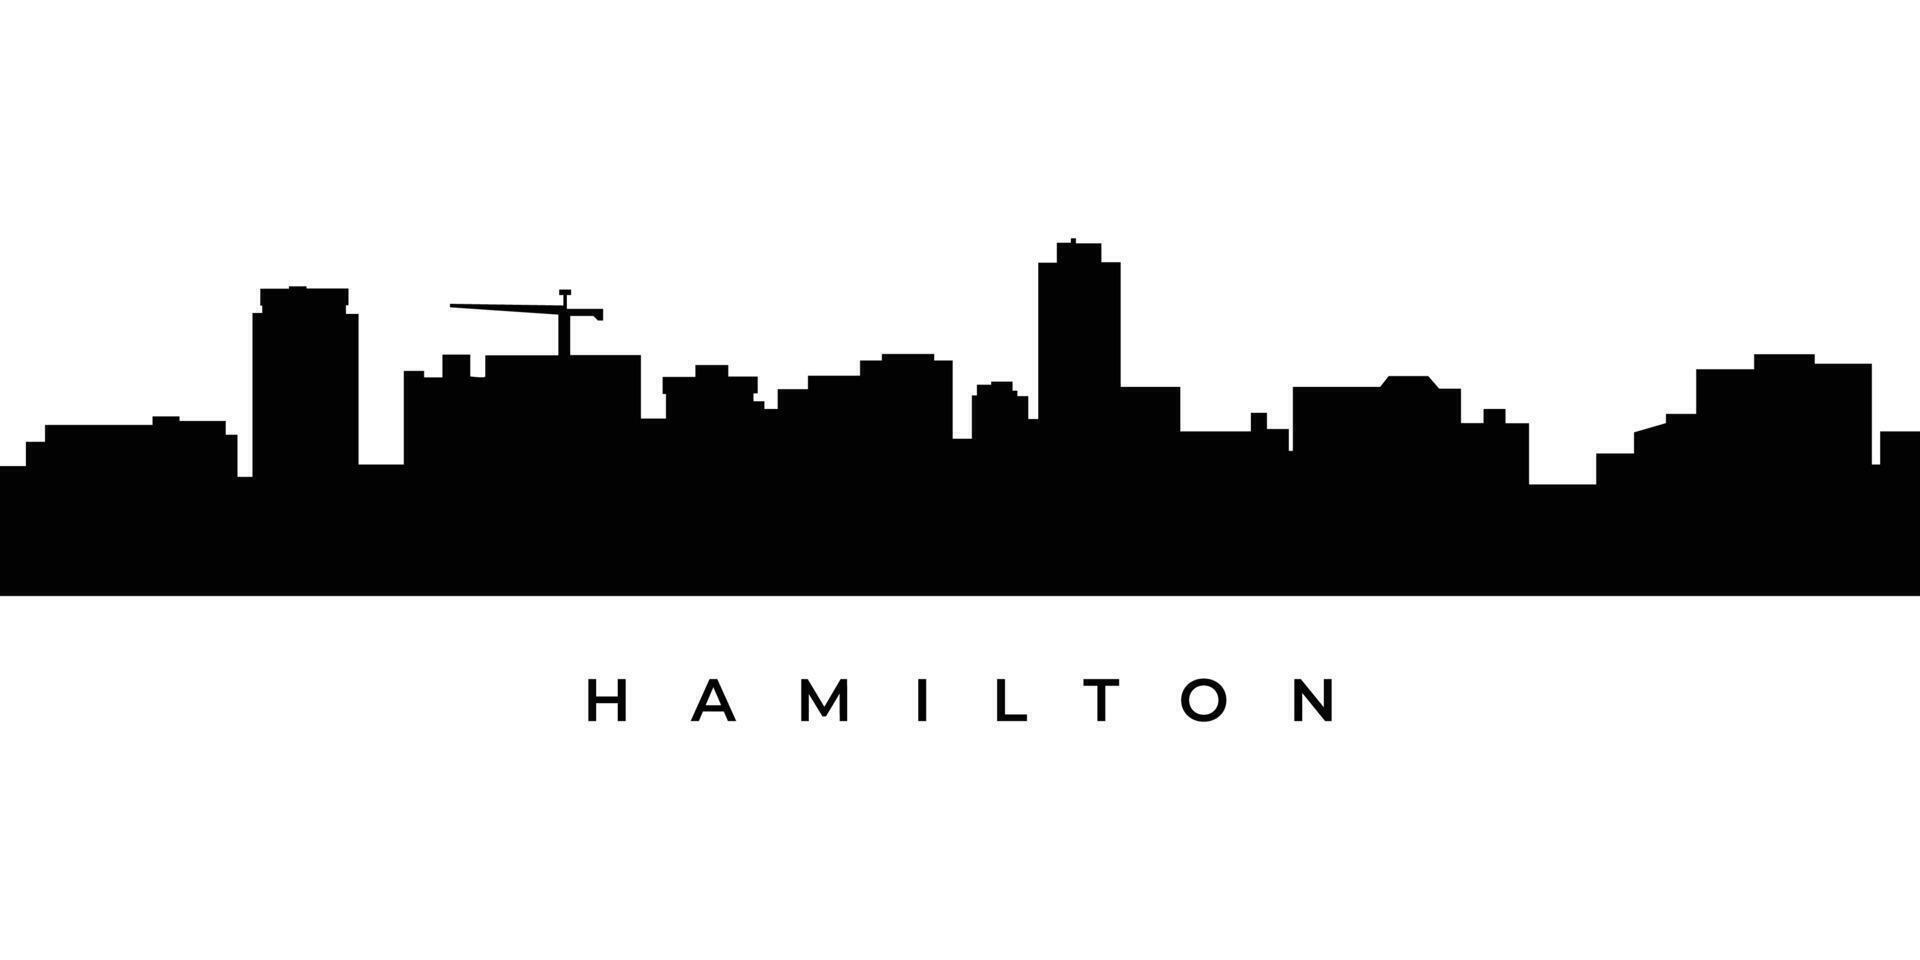 Hamilton city skyline silhouette illustration vector